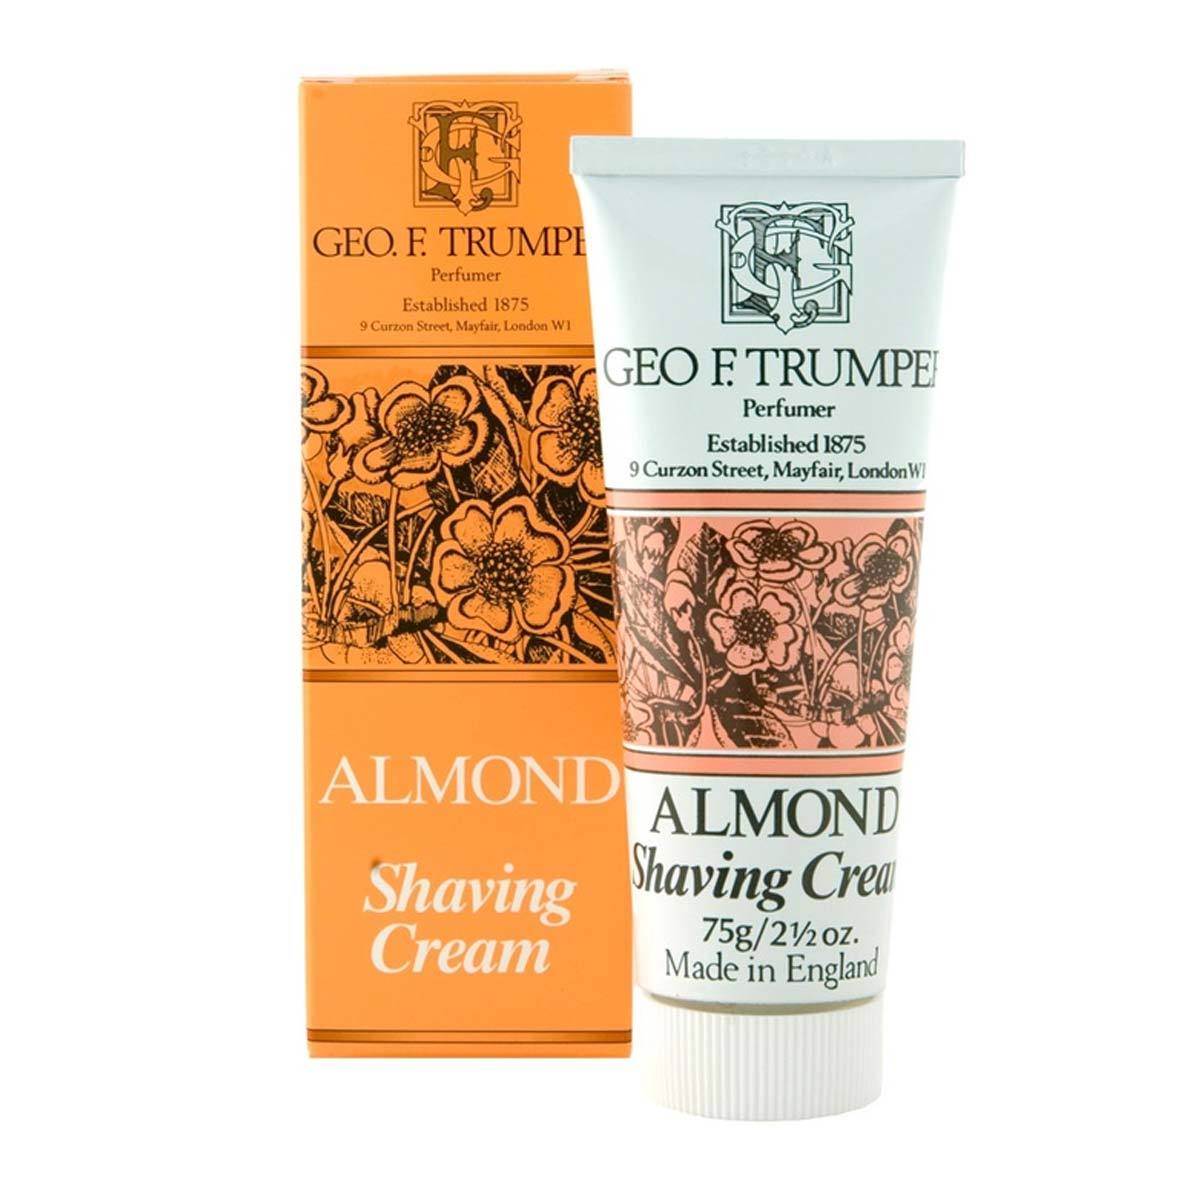 Primary image of Almond Soft Shaving Cream